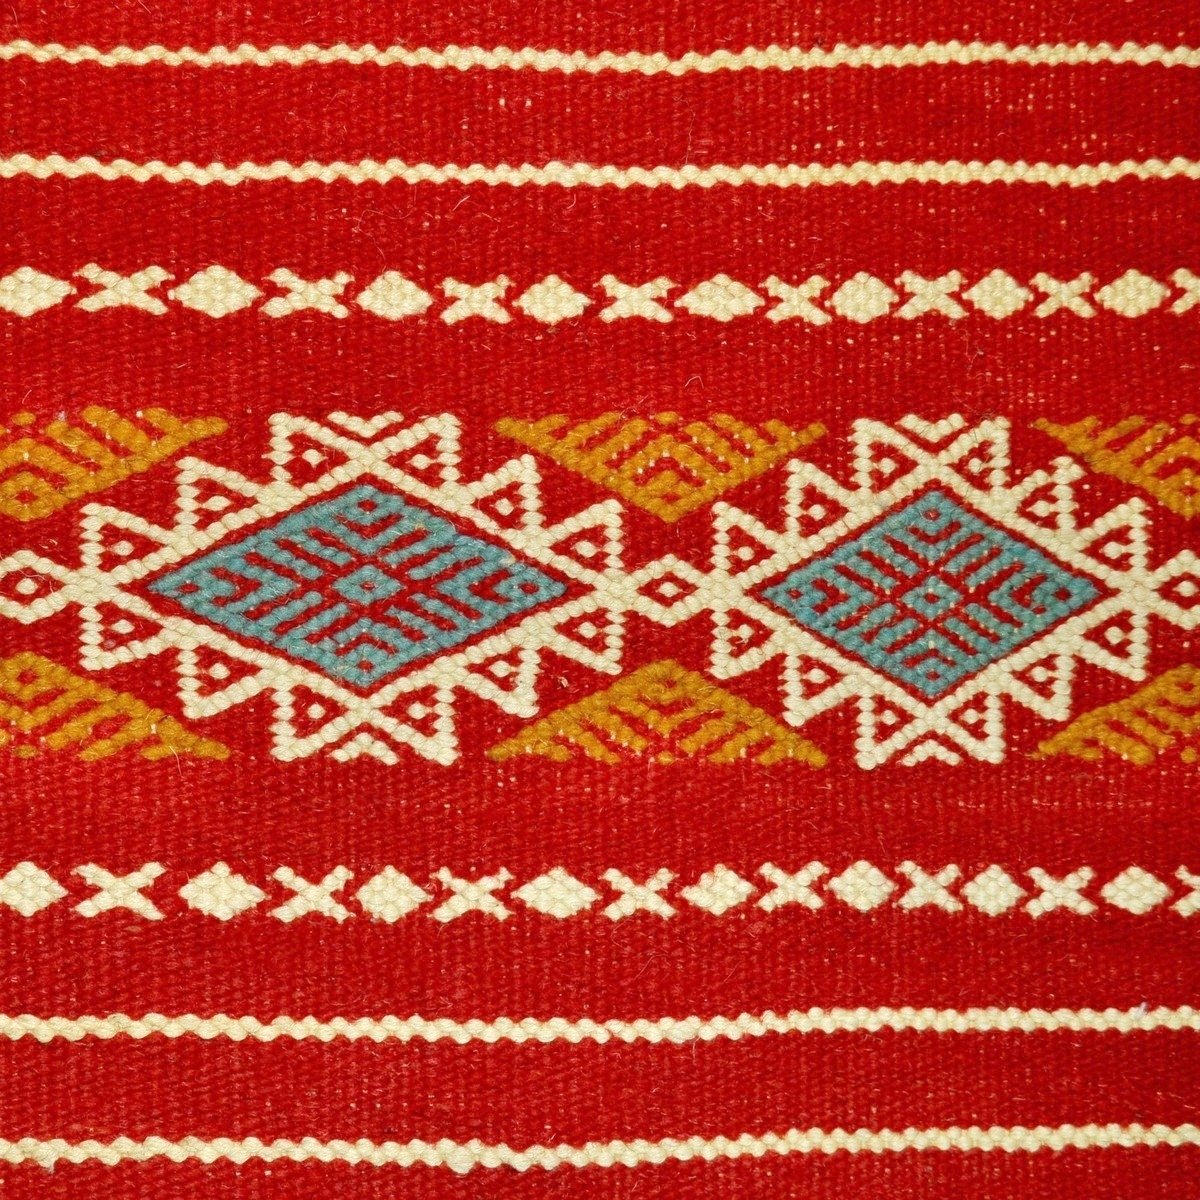 Tapete berbere Tapete Kilim longo Mellassine 60x200 Vermelho (Tecidos à mão, Lã, Tunísia) Tapete tunisiano kilim, estilo marroqu